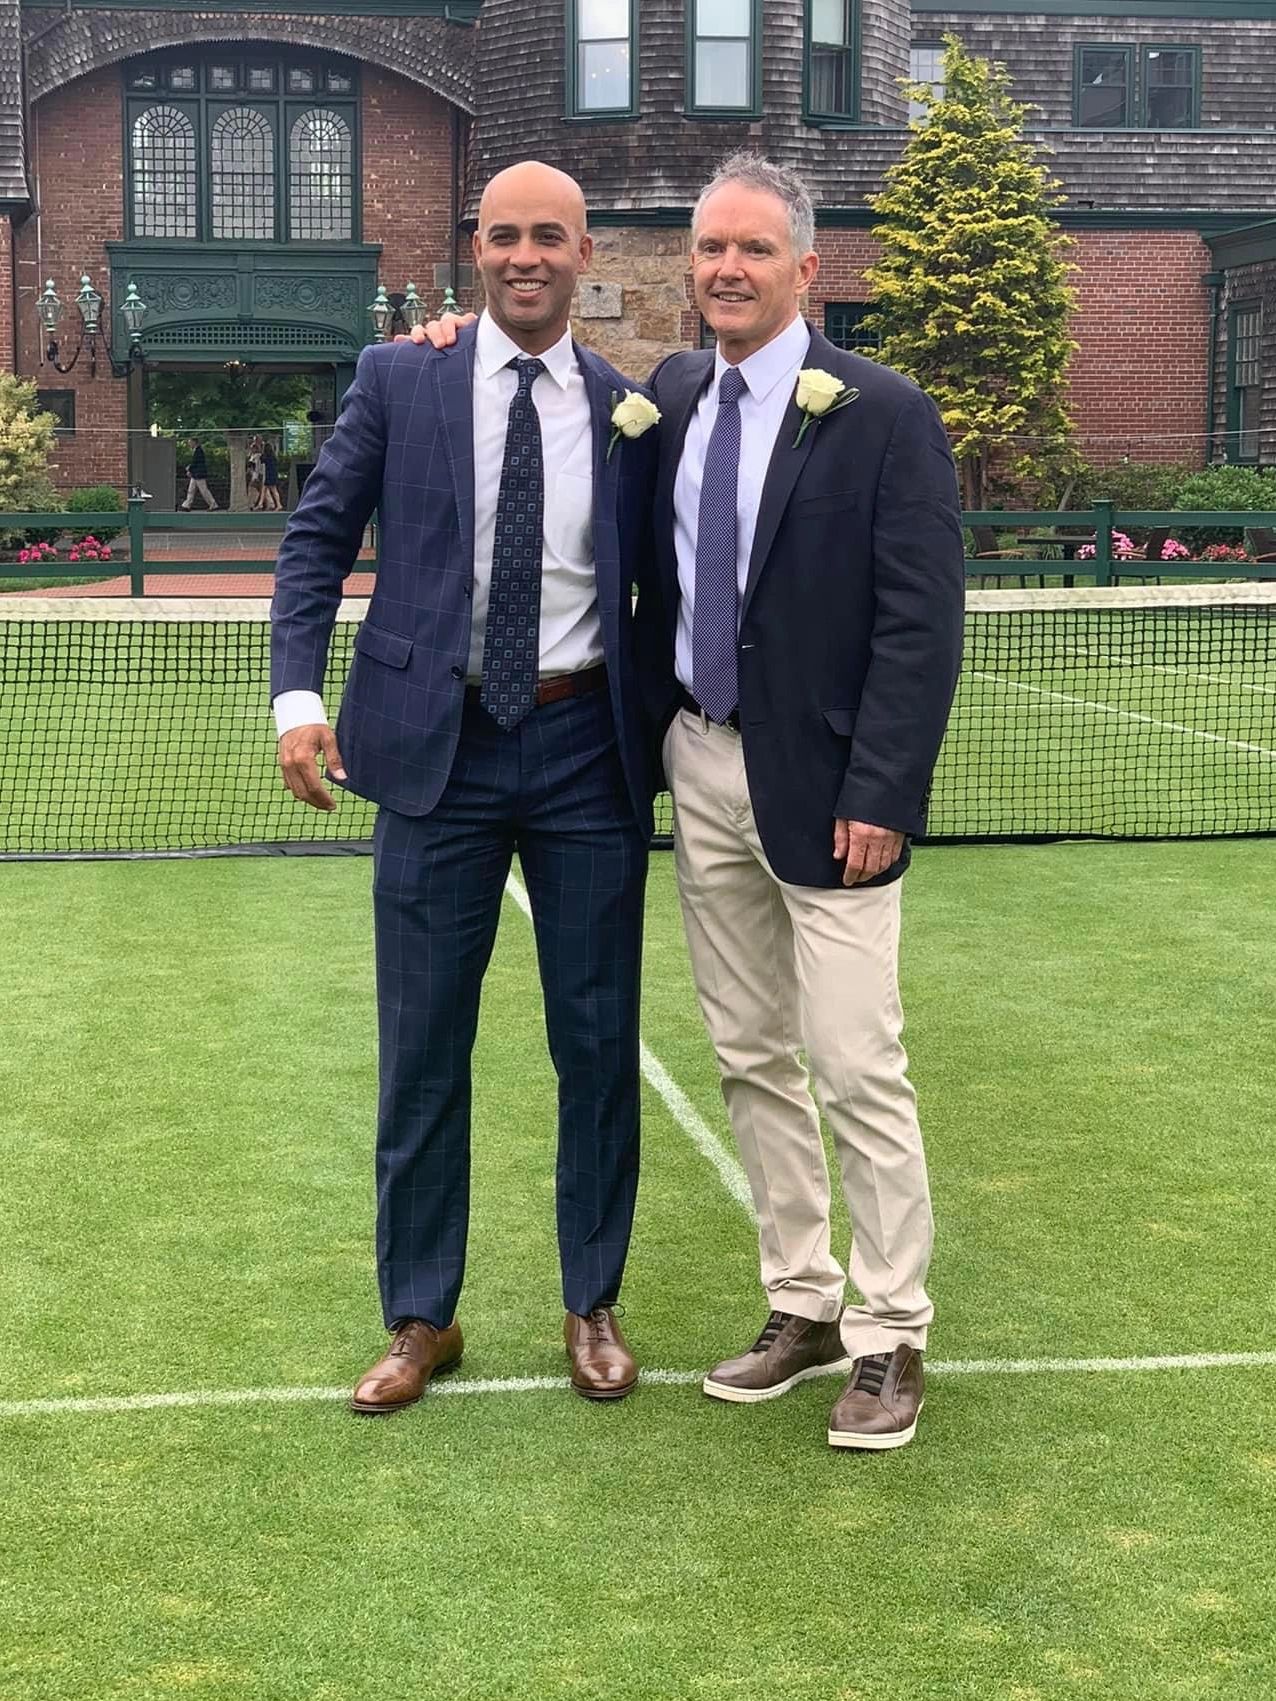 JB and Coach into NE Tennis Hall of Fame